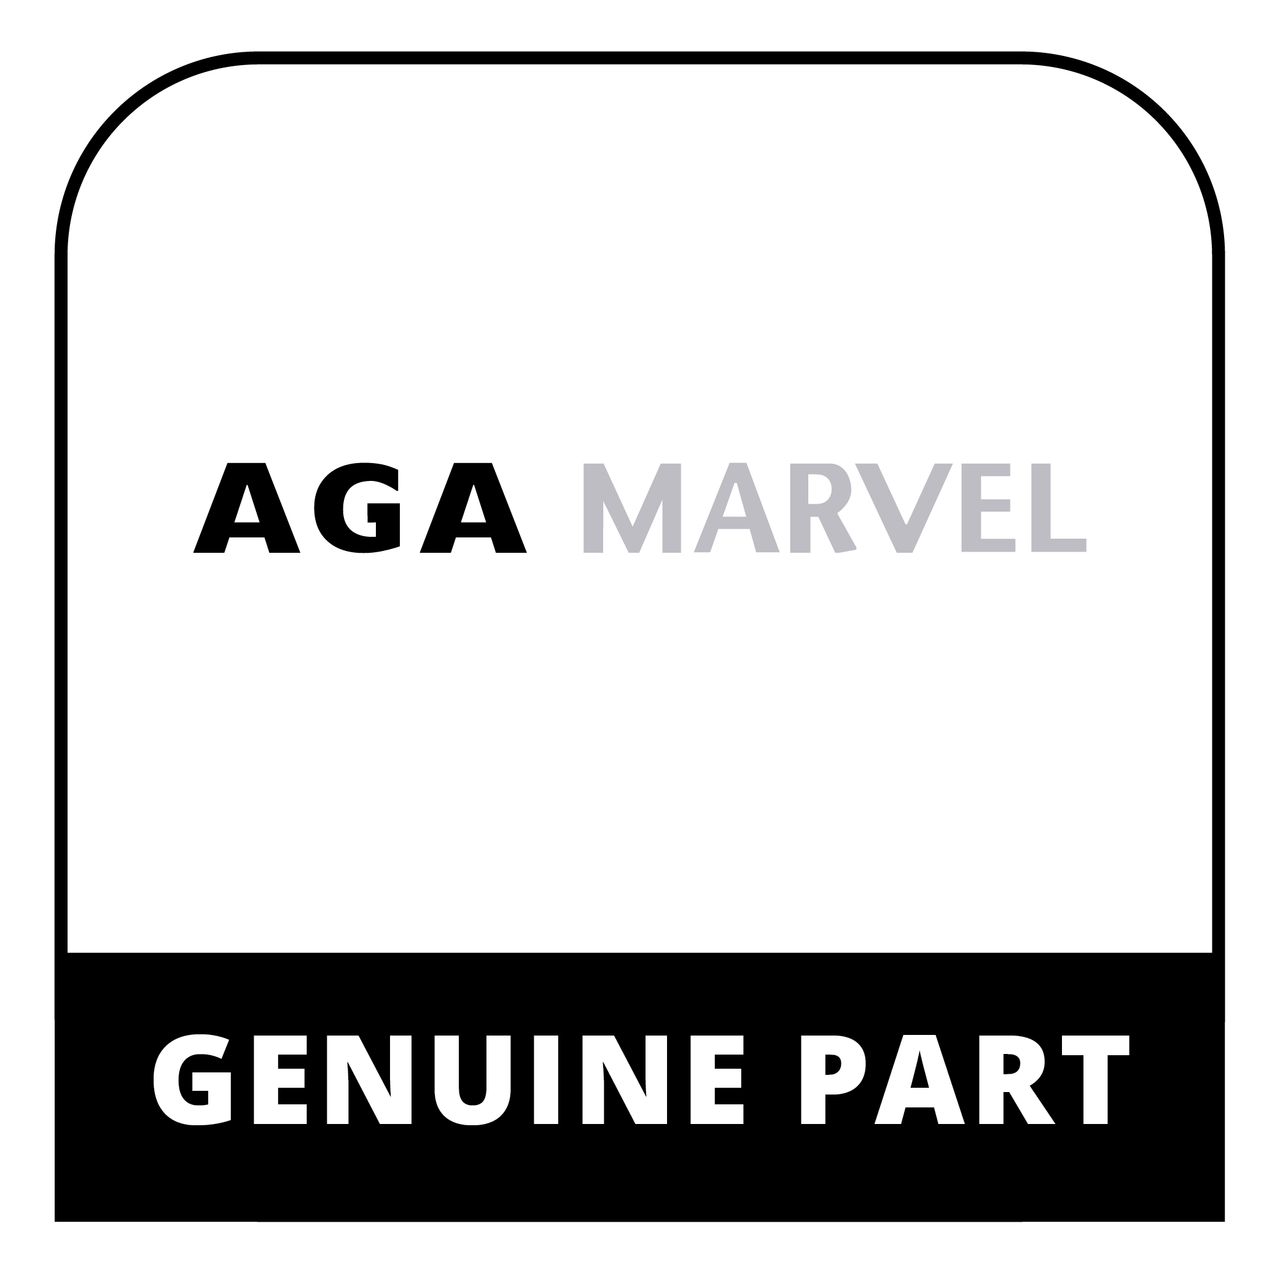 AGA Marvel C1920 - Q00576Cxx - Back Panel - Genuine AGA Marvel Part